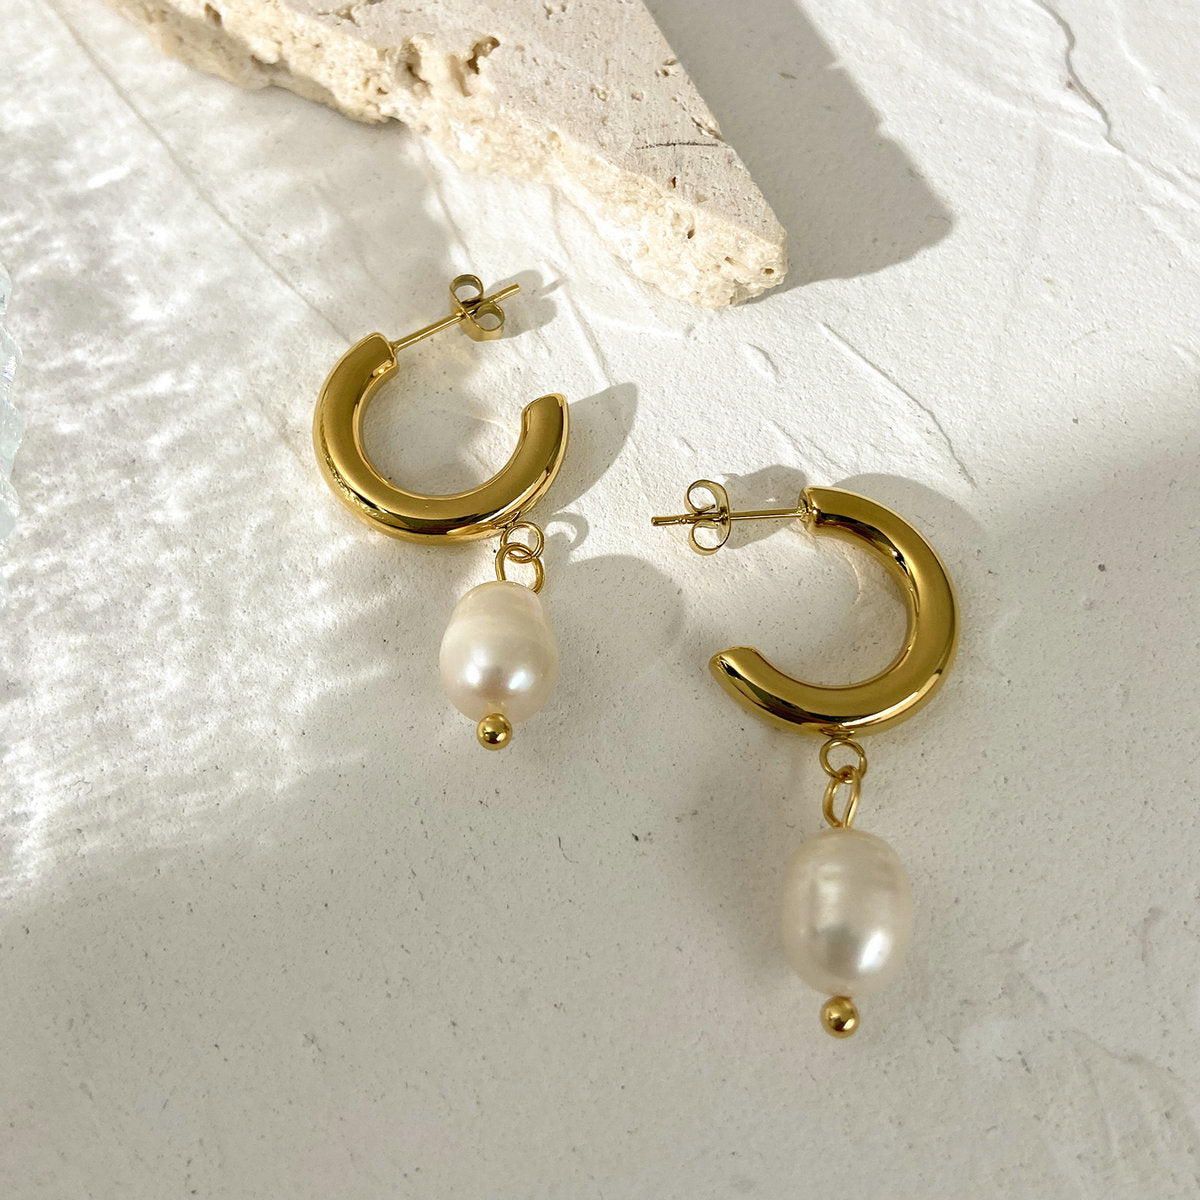 Fashion Pearl Hoop Earrings medyjewelry